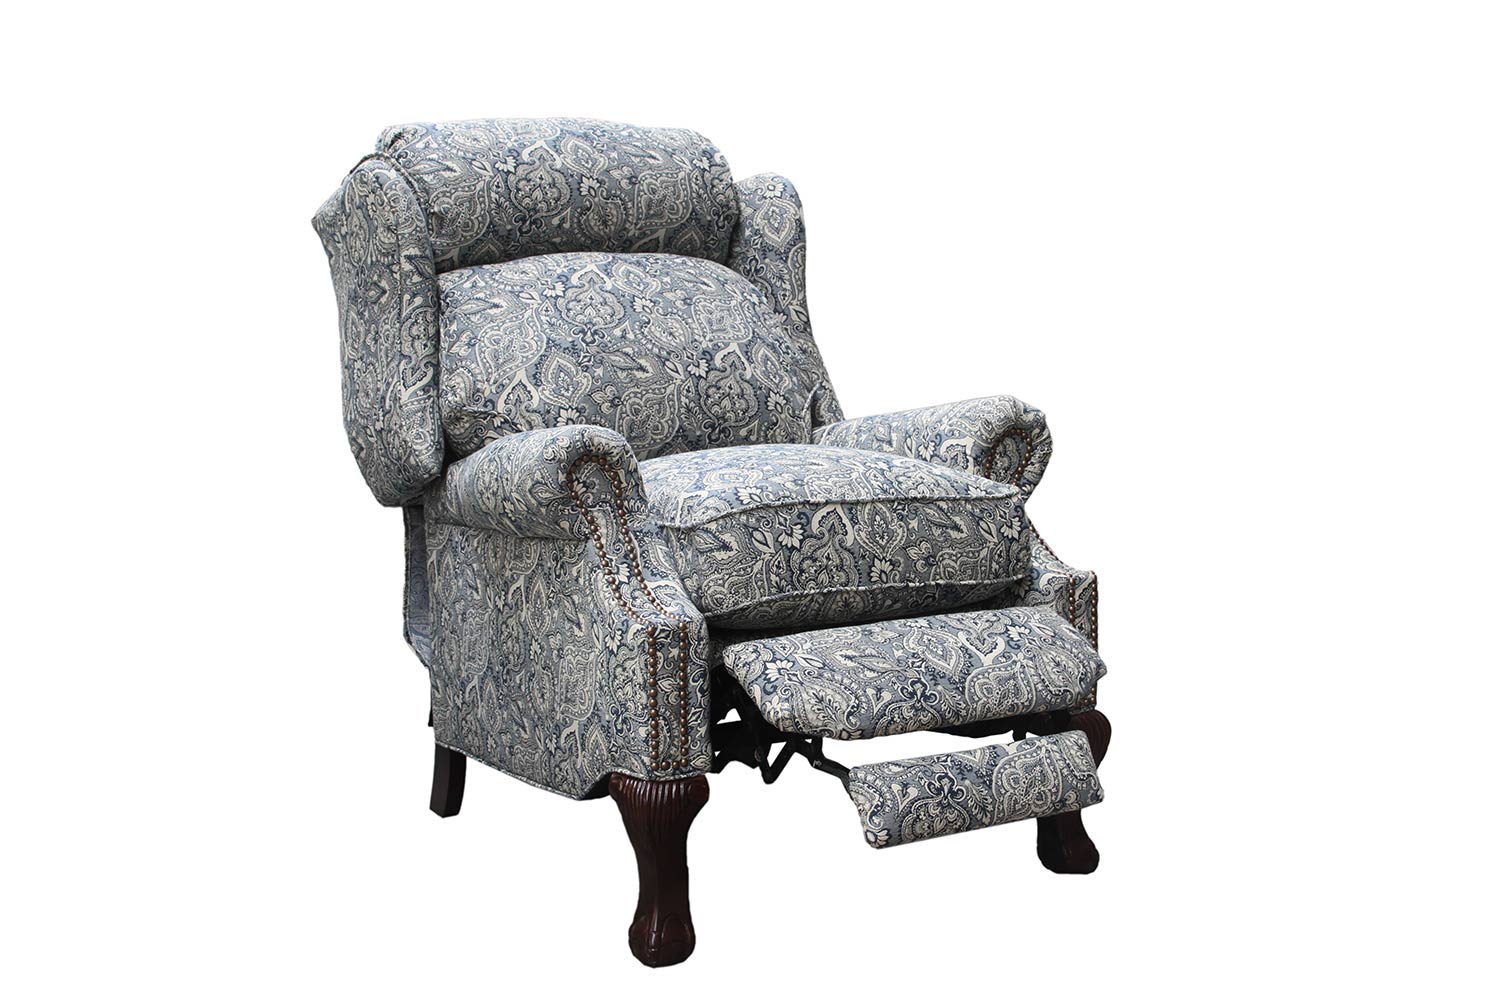 Barcalounger Danbury Recliner Chair - Rustic Cobalt fabric